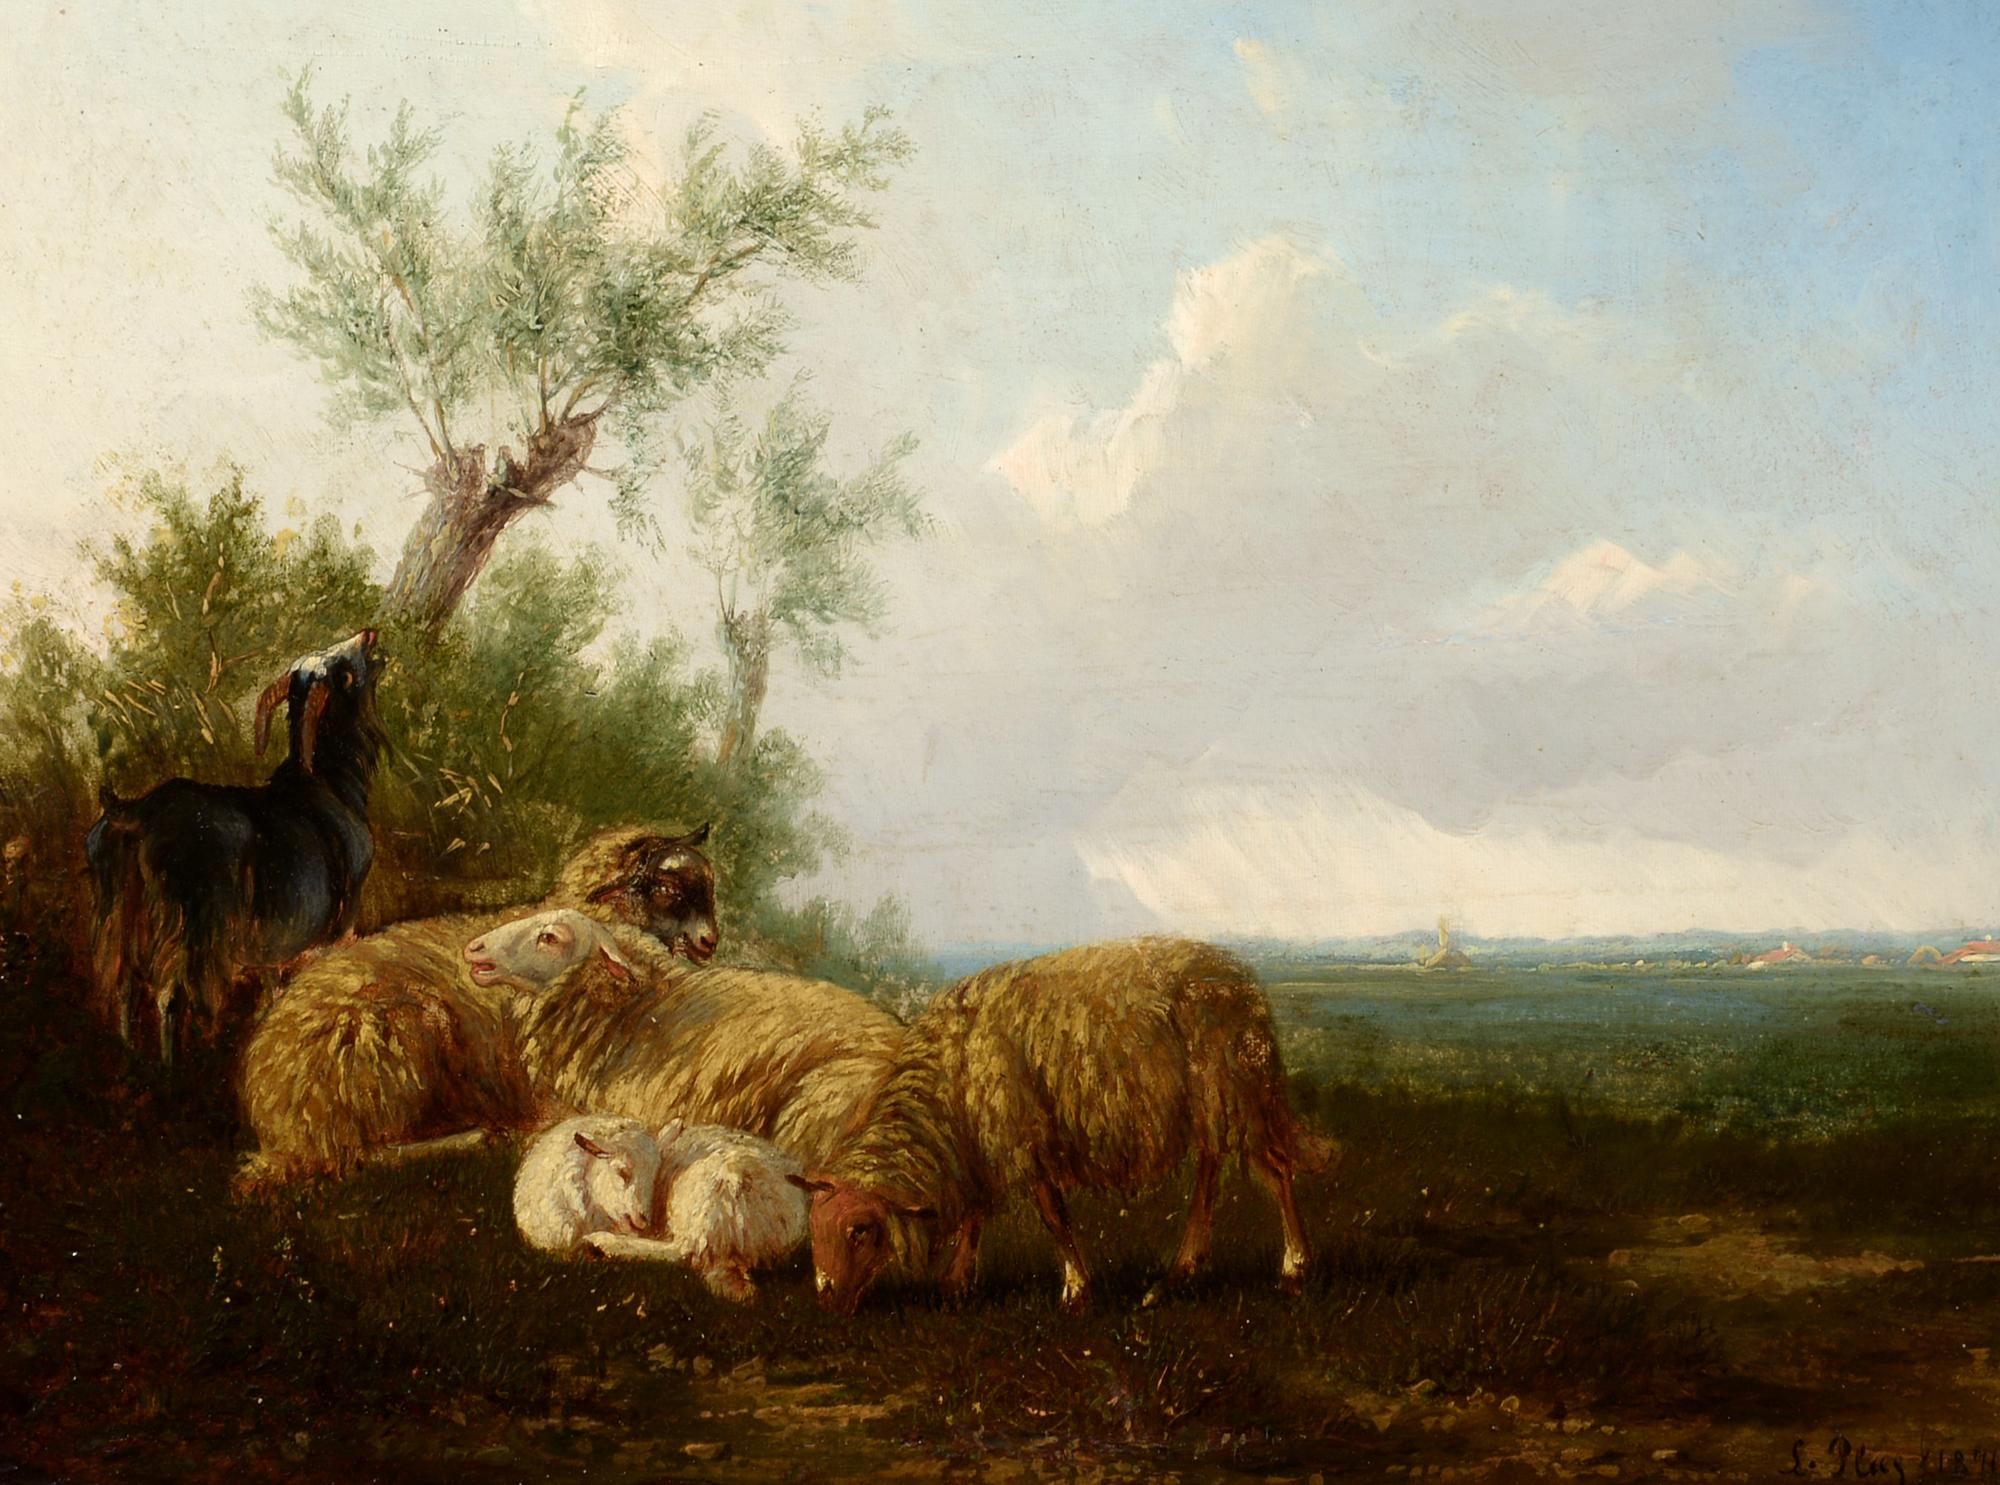 Plas, Louwerencius (Lourentius) Animal Painting - "Passing Shower" 19th Century Dutch Romantic Realist Landscape with Sheep